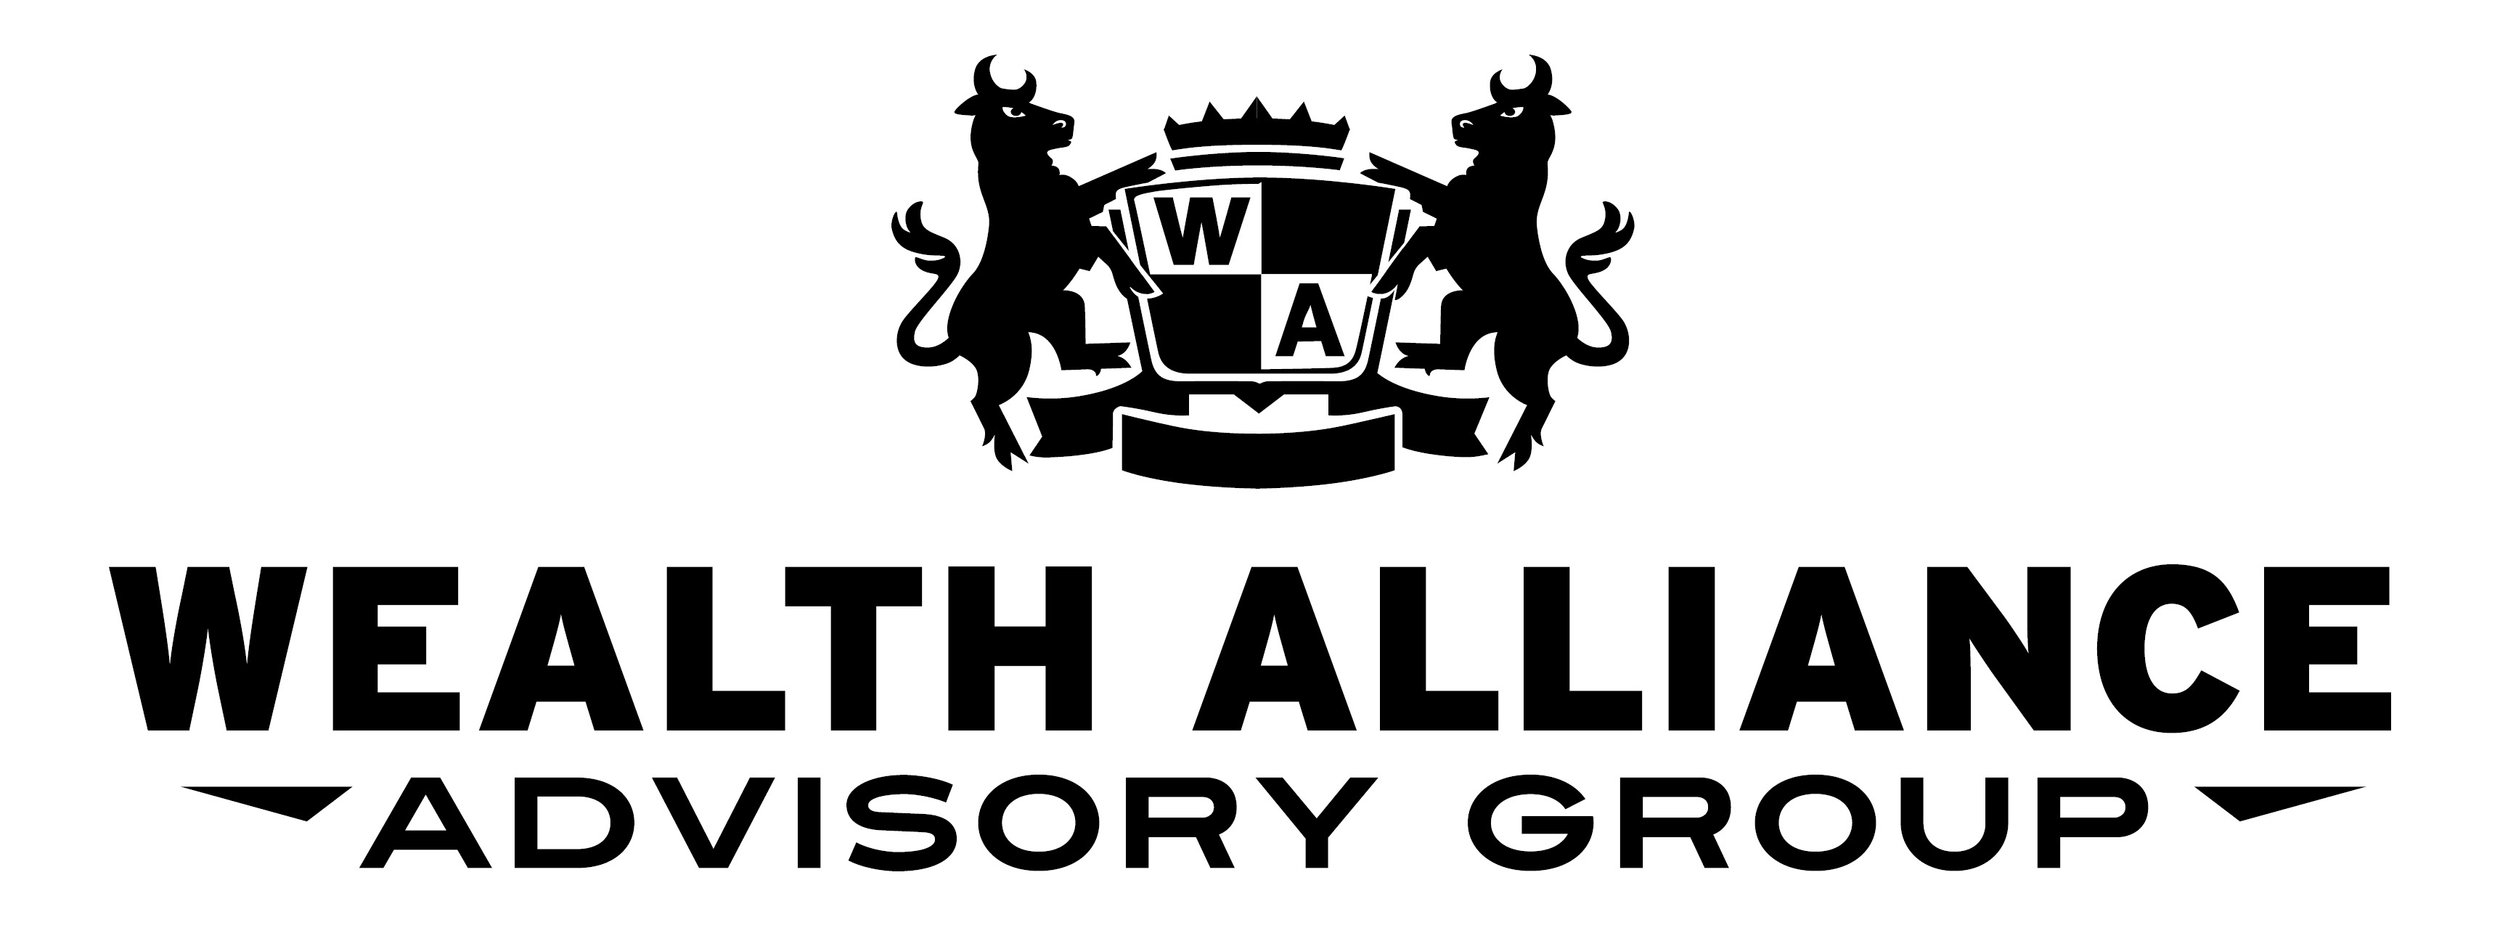 Wealth Alliance Logo - Web.jpg